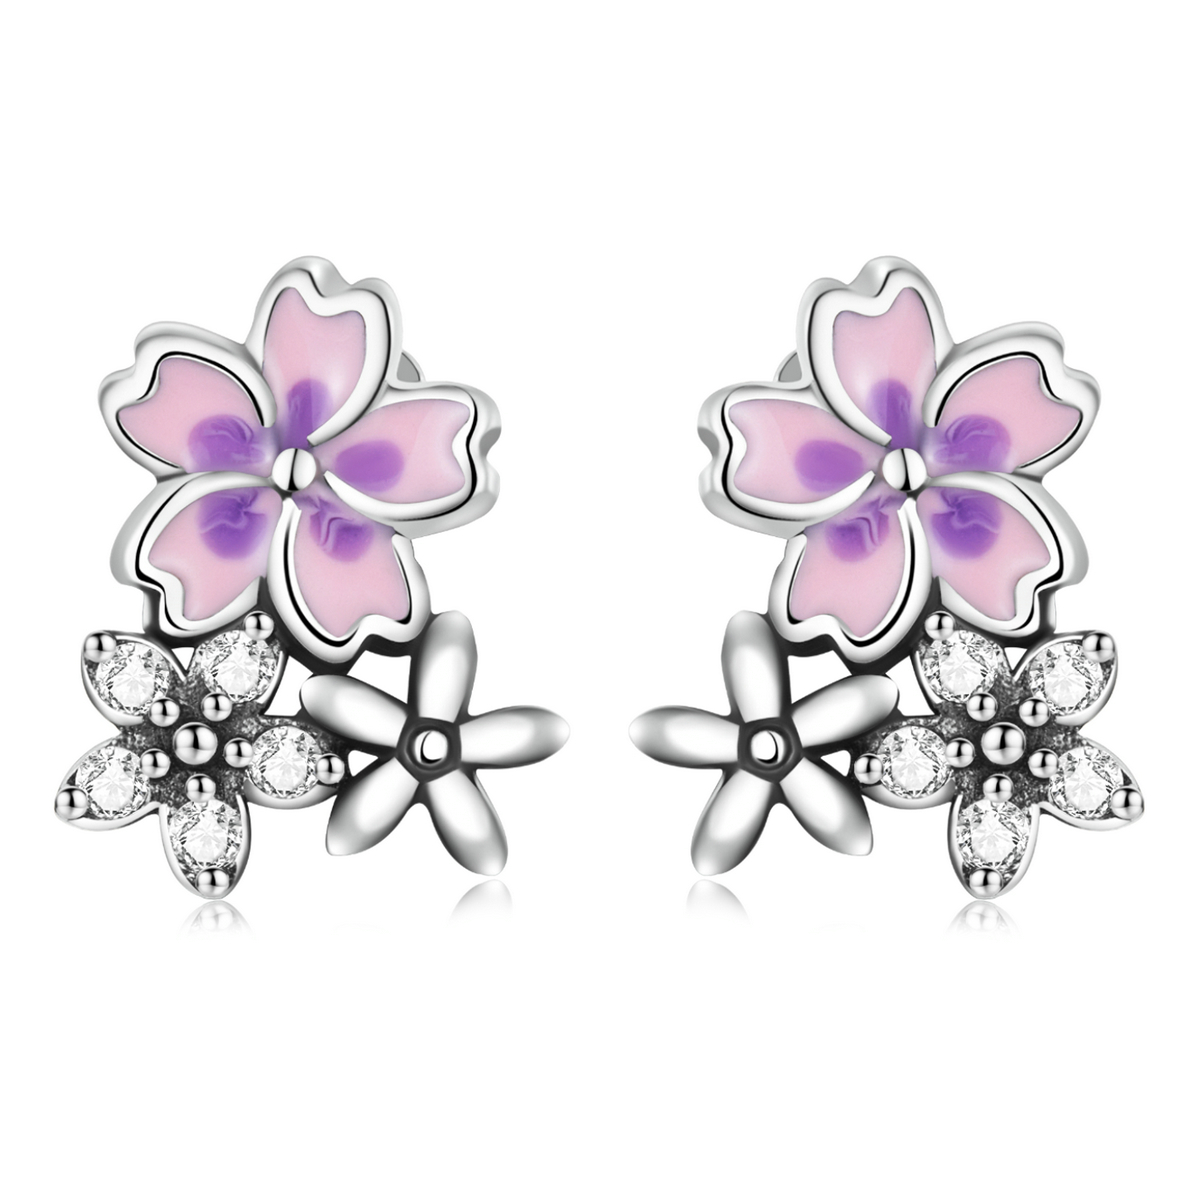 pandora style delicate flowers stud earrings sce1390